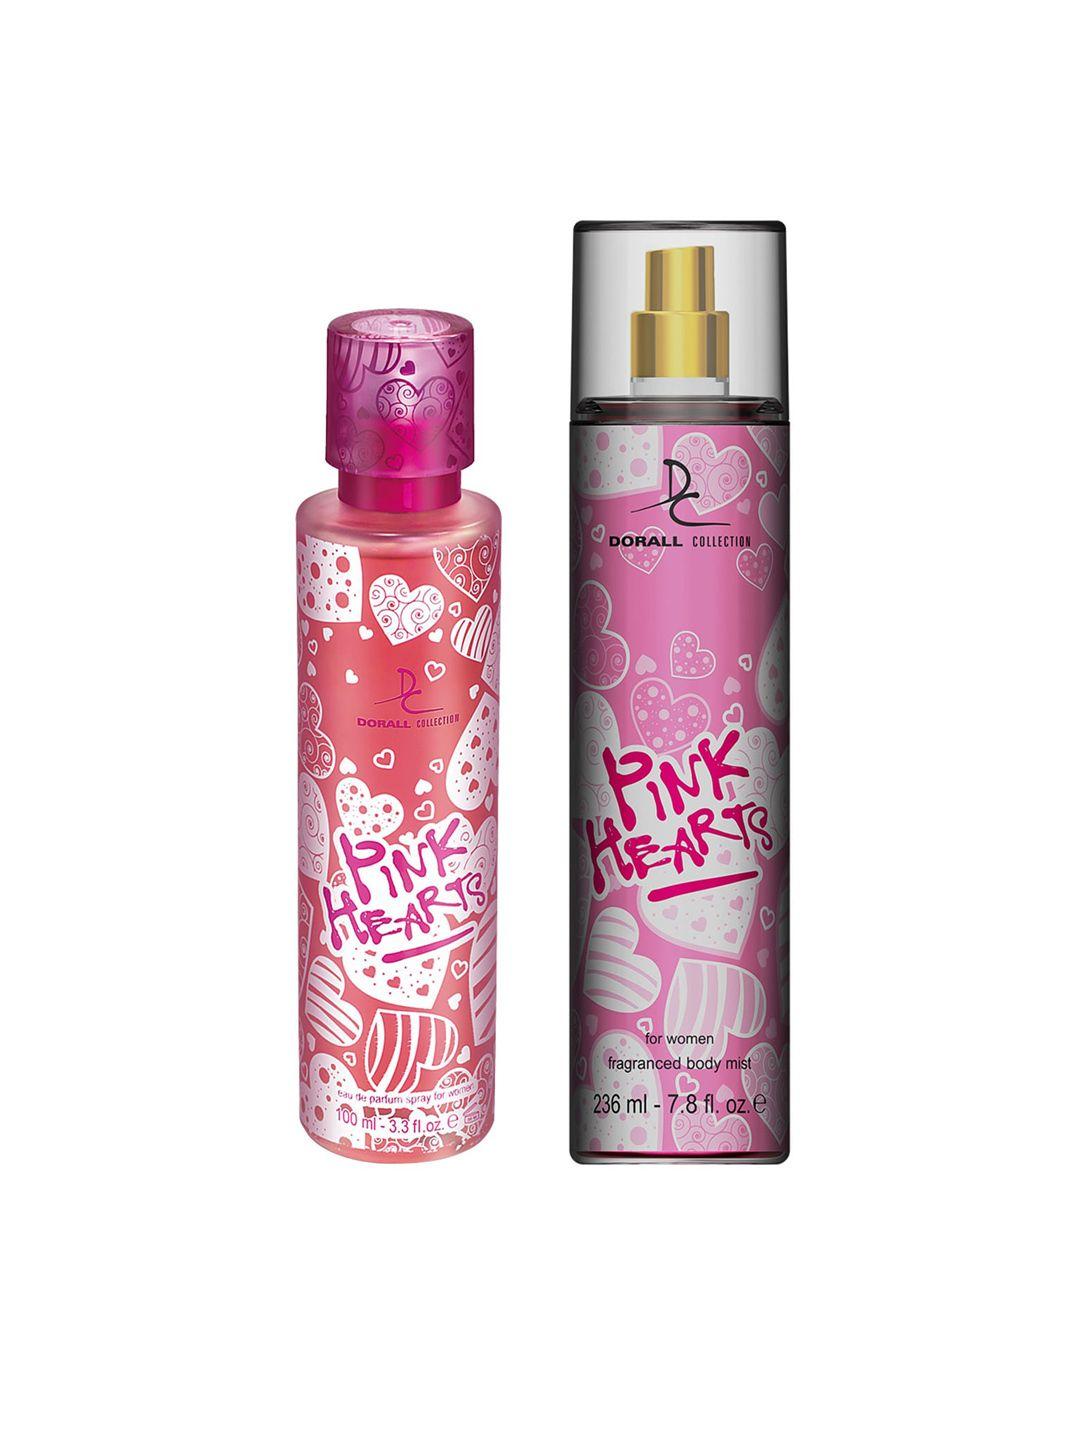 dorall collection women pink hearts gift set - eau de parfum 100ml + body mist 236ml